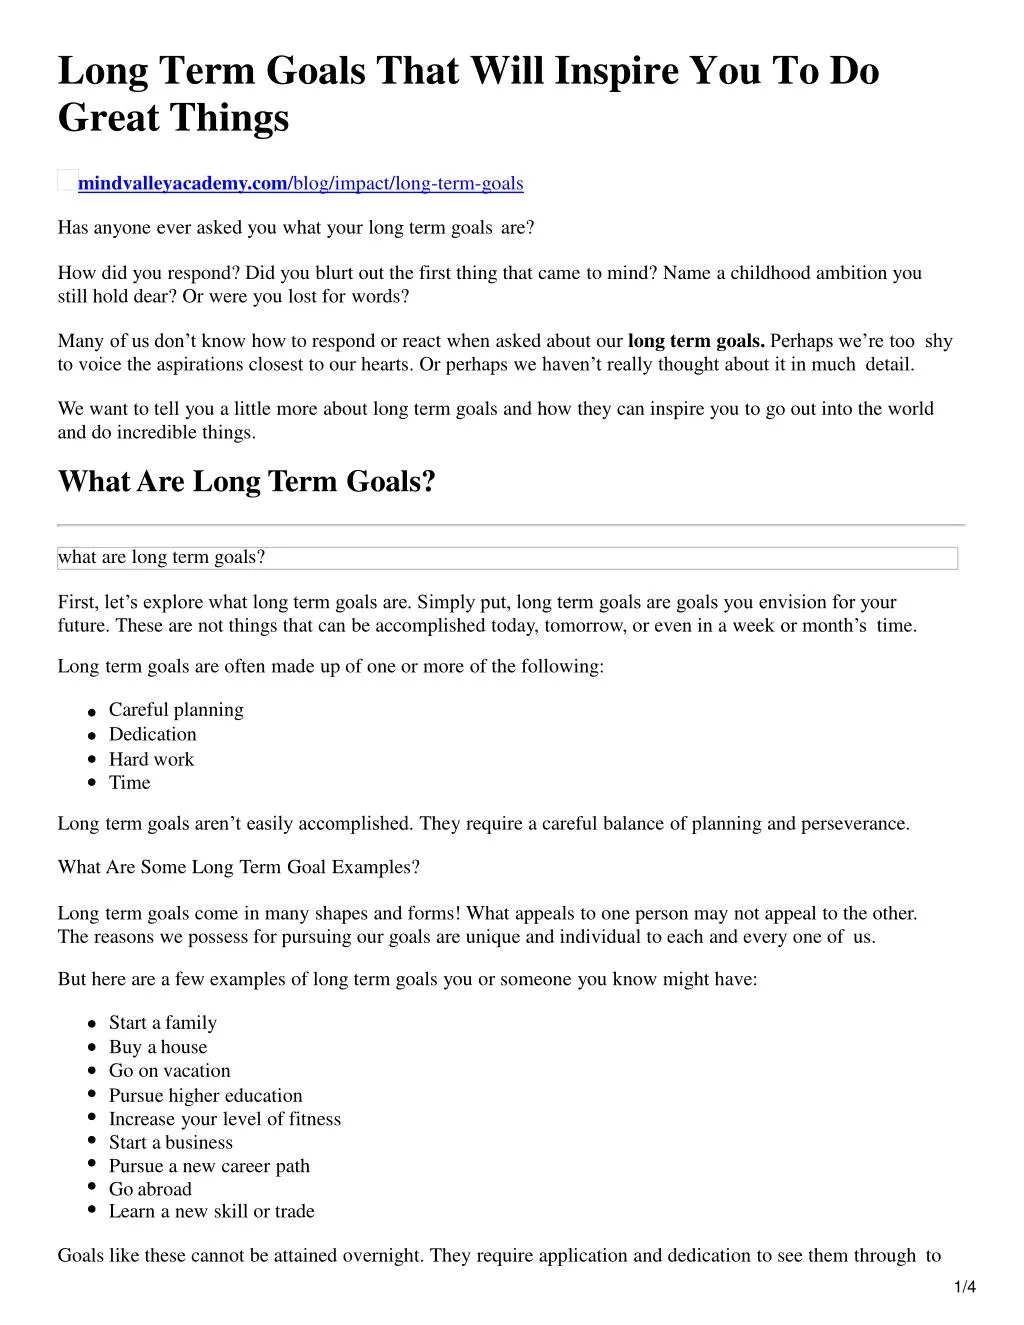 PPT - Medium term goals PowerPoint Presentation, free download